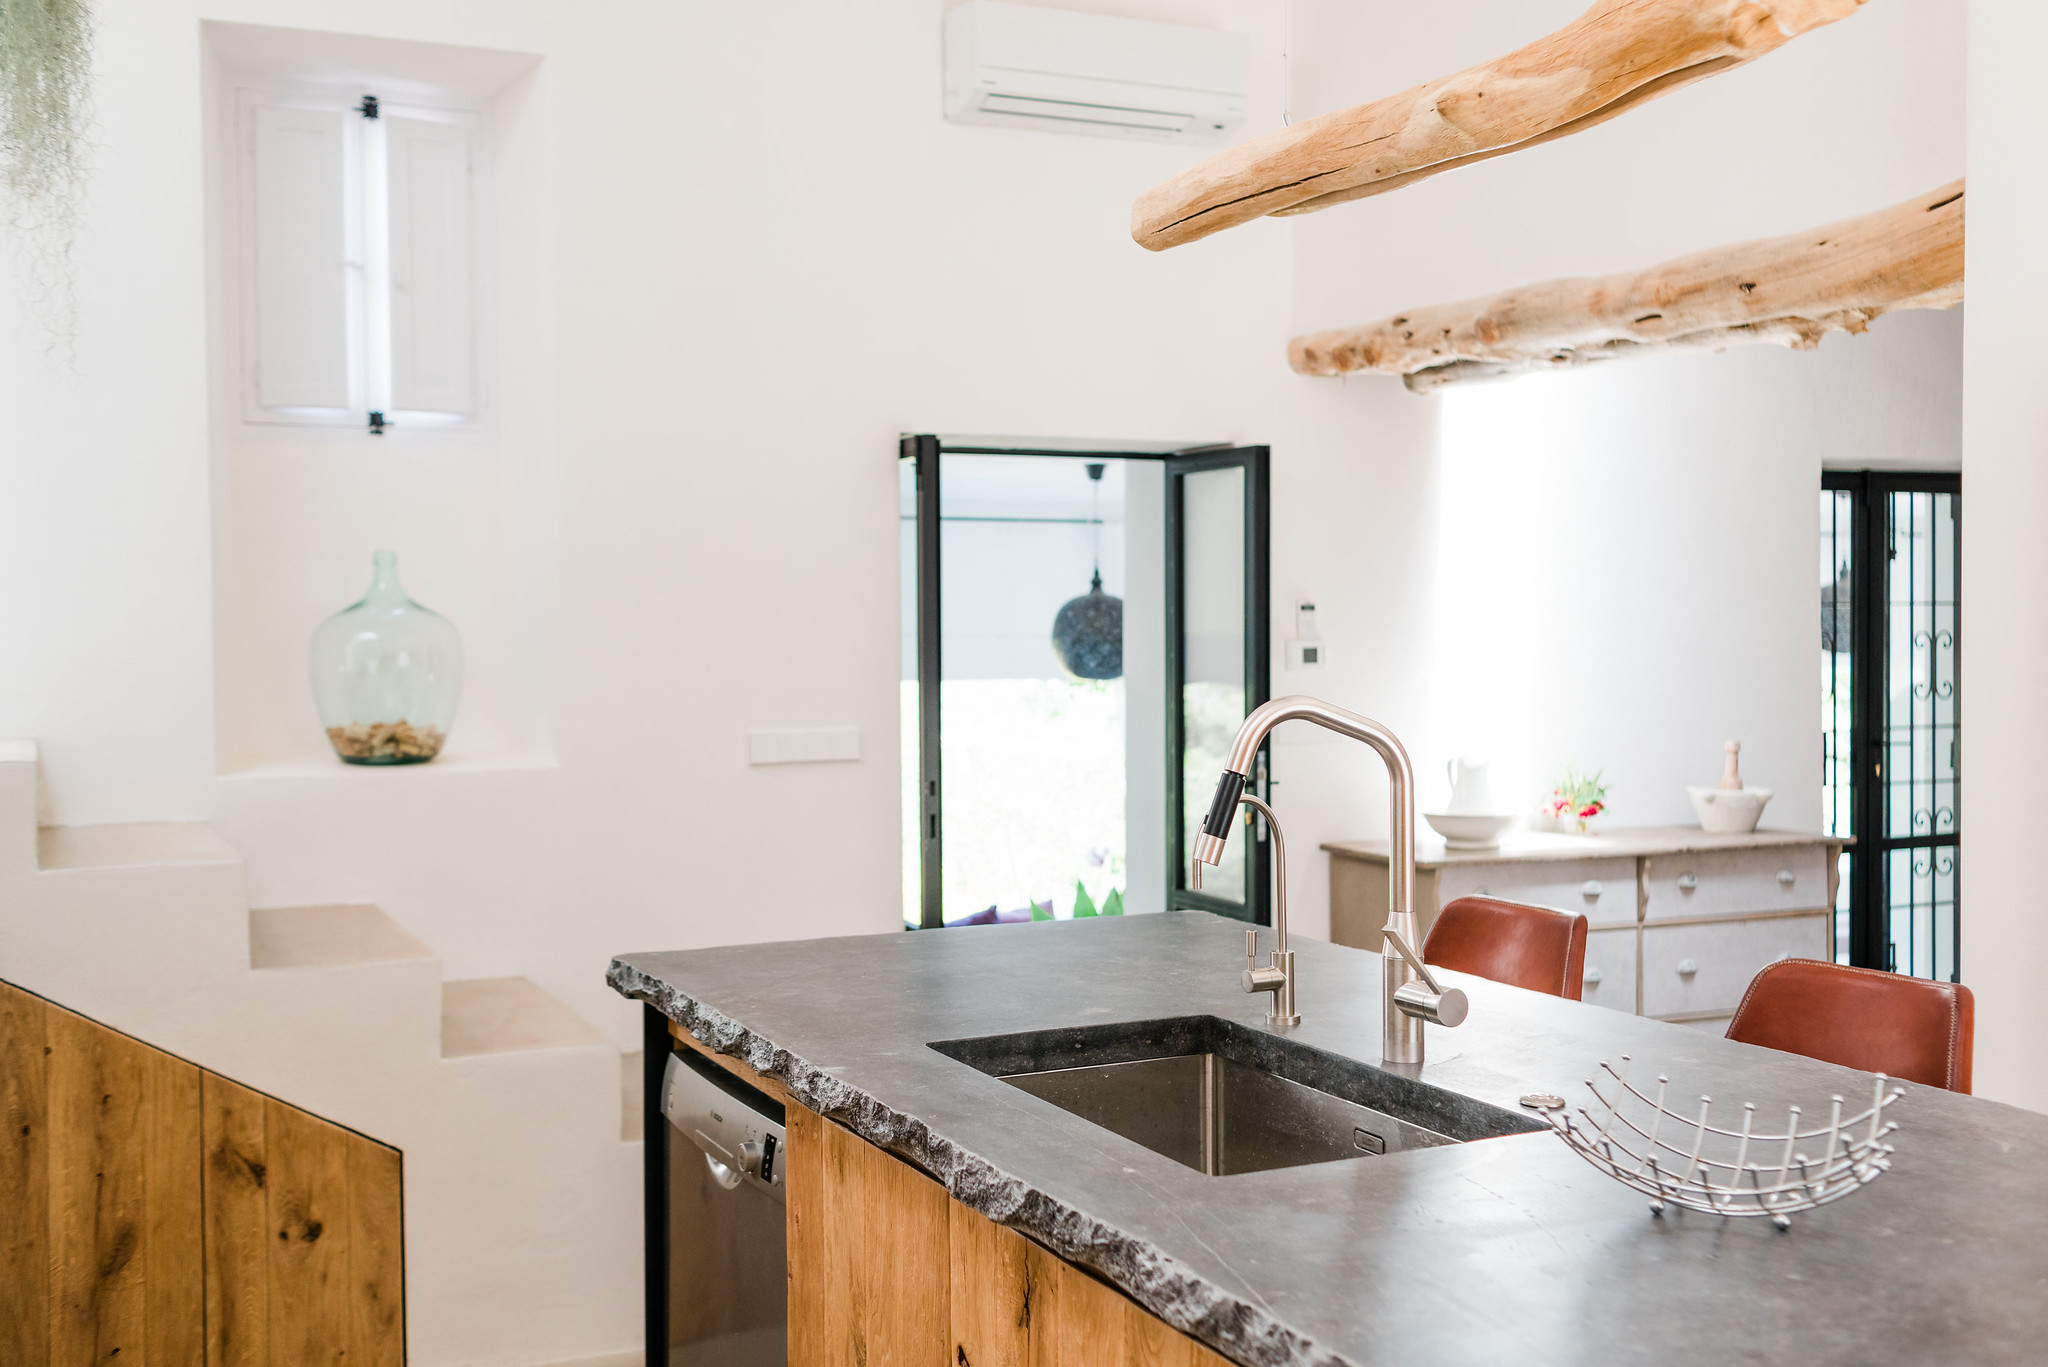 https://www.white-ibiza.com/wp-content/uploads/2020/06/white-ibiza-villas-can-calma-interior-kitchen2.jpg